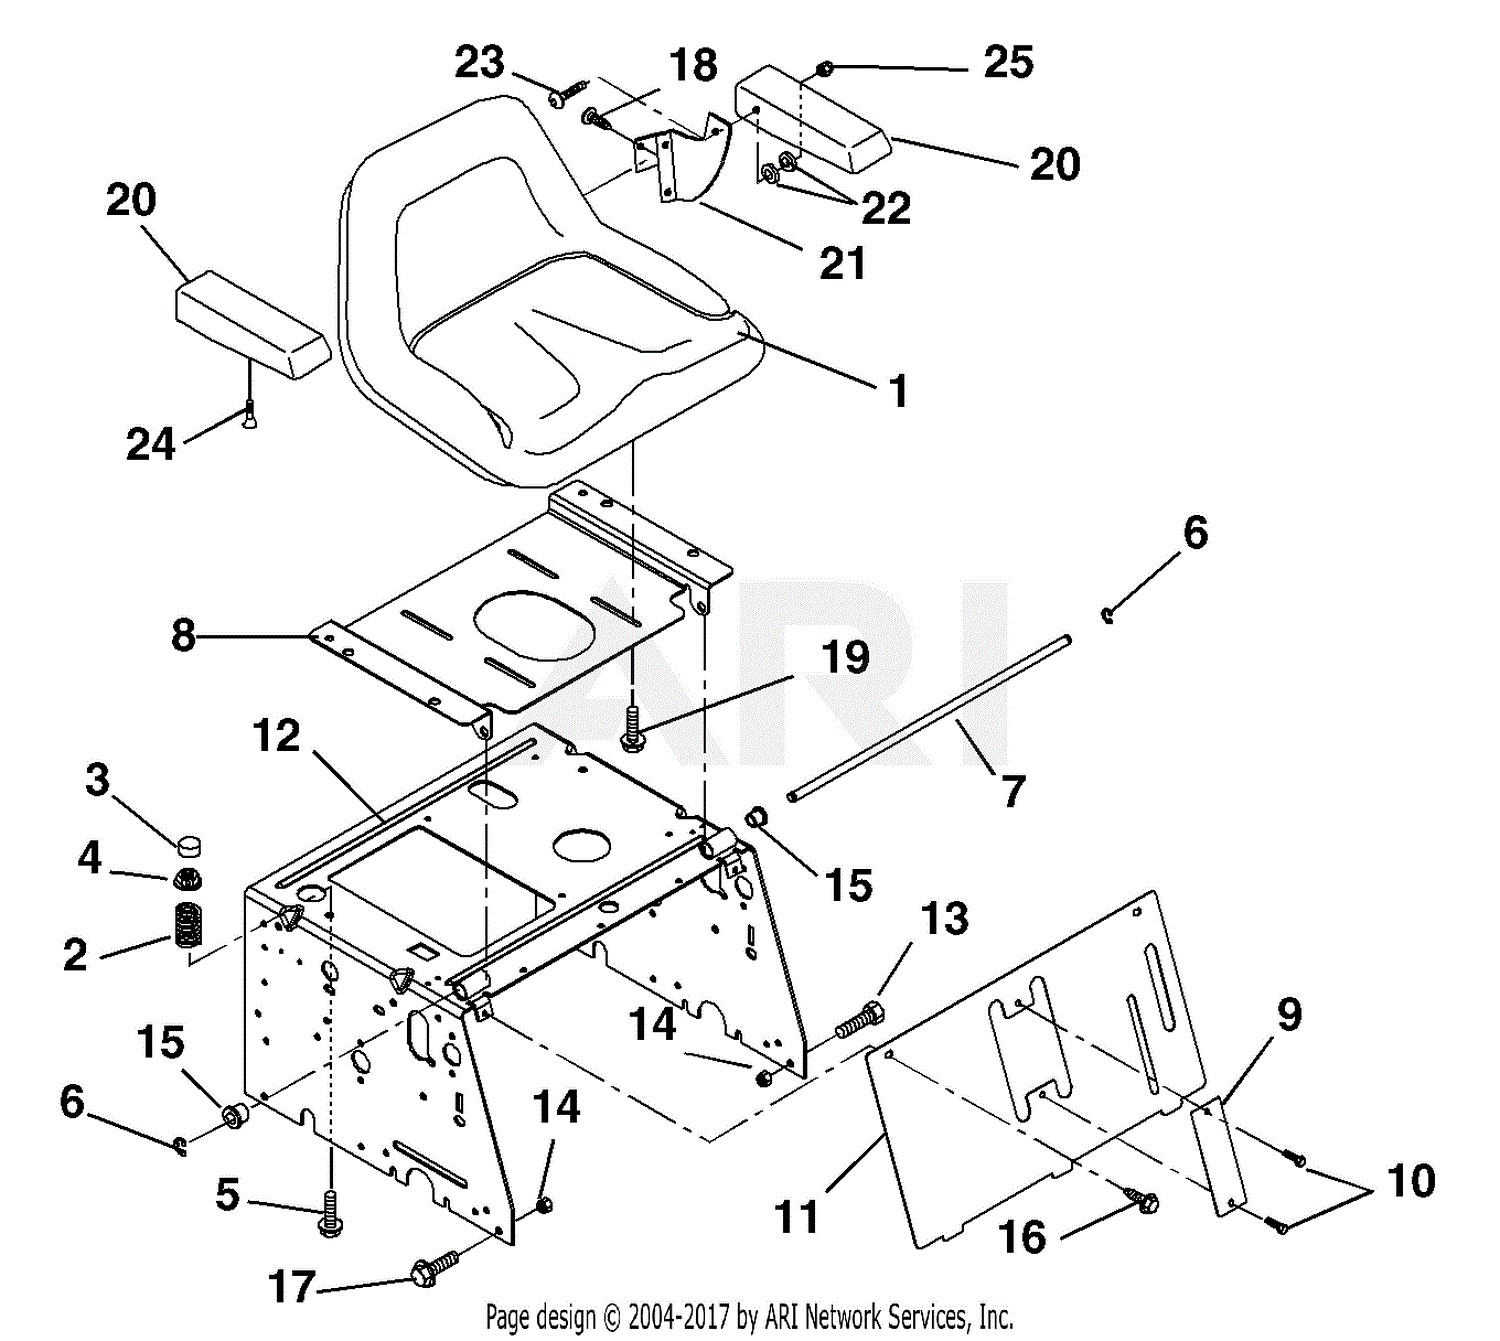 Parts Diagram Craftsman 17.5 Hp Lawn Mower Ariens 17 5 Hp Riding Mower Wiring Diagram Of Parts Diagram Craftsman 17.5 Hp Lawn Mower